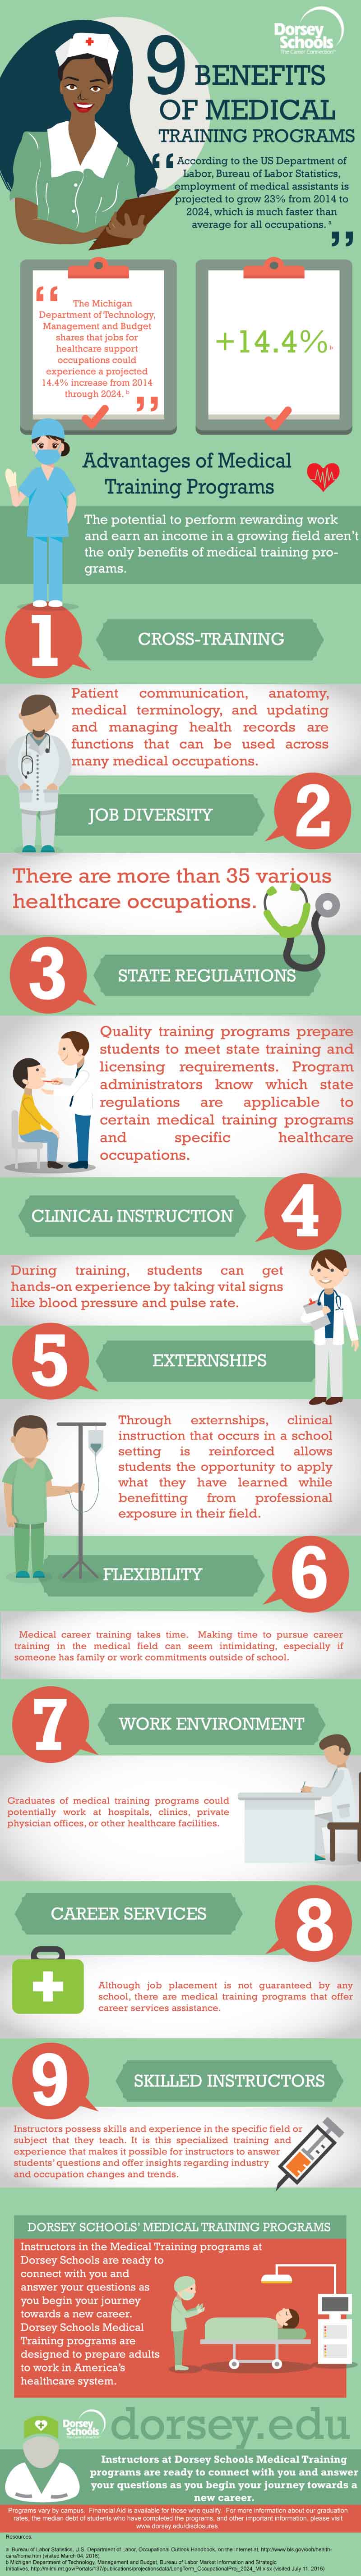 9 Benefits of Medical Training Programs